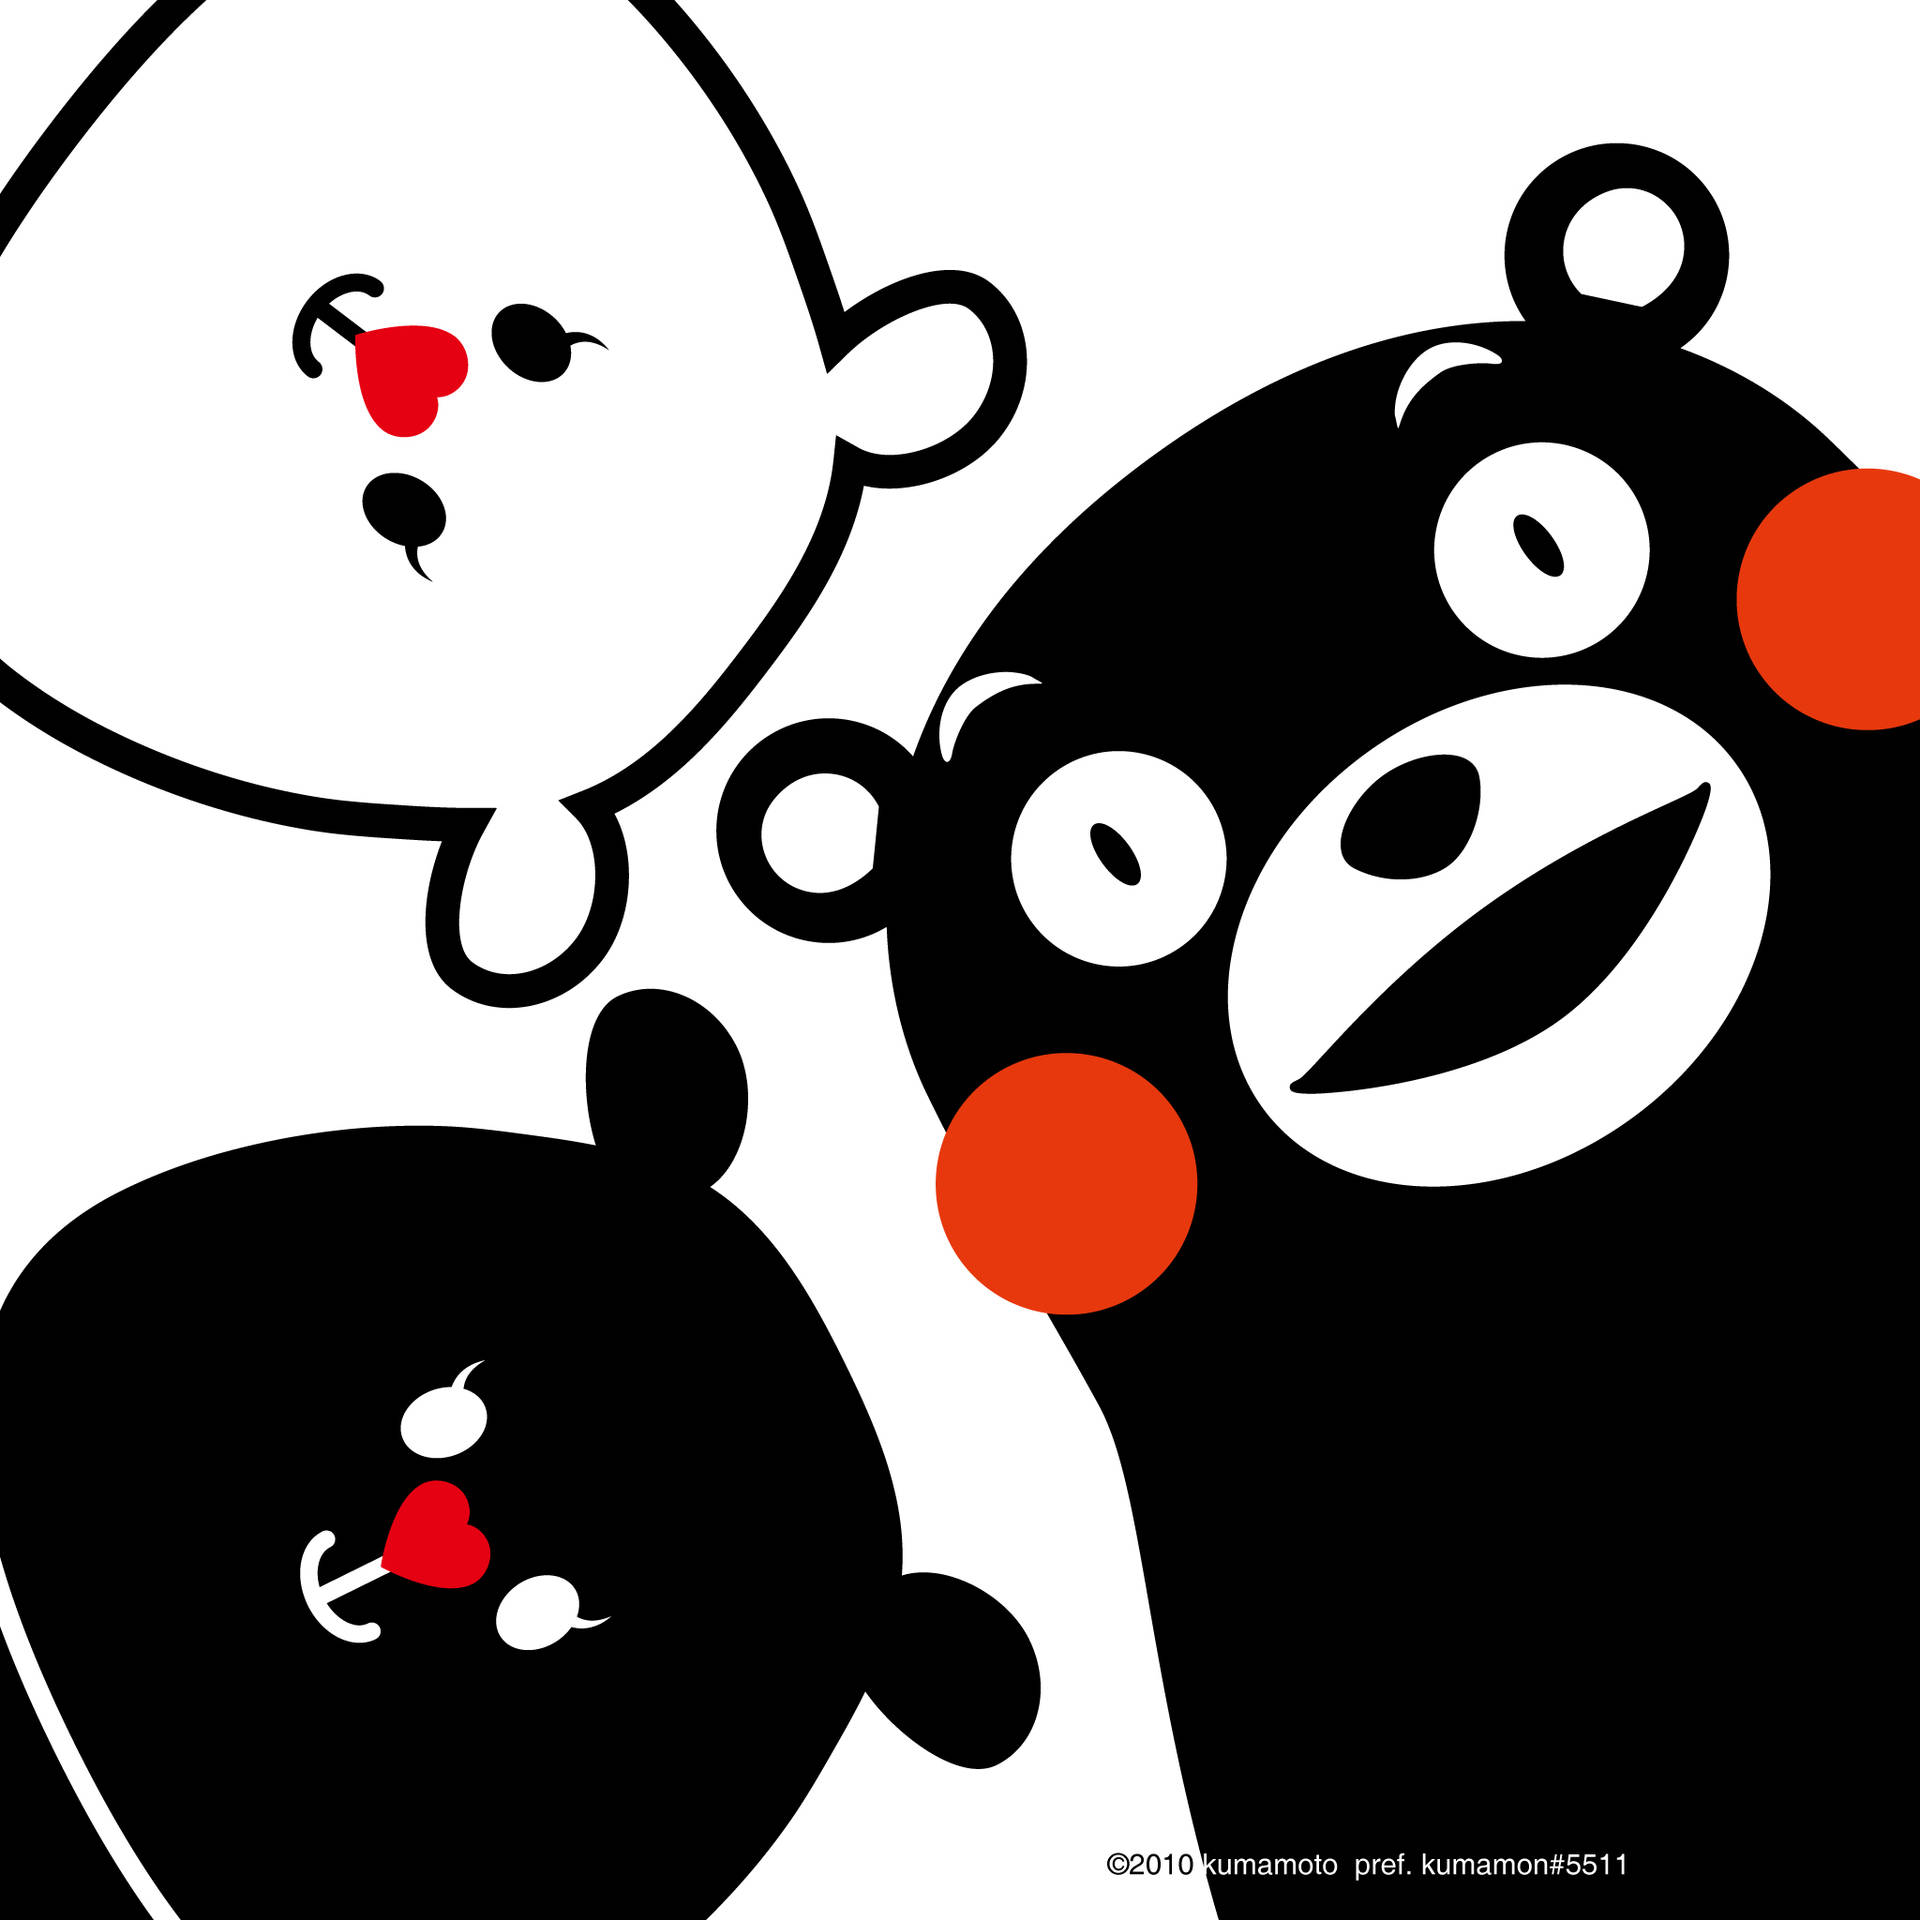 Kumamon With Two Cartoon Bears Background